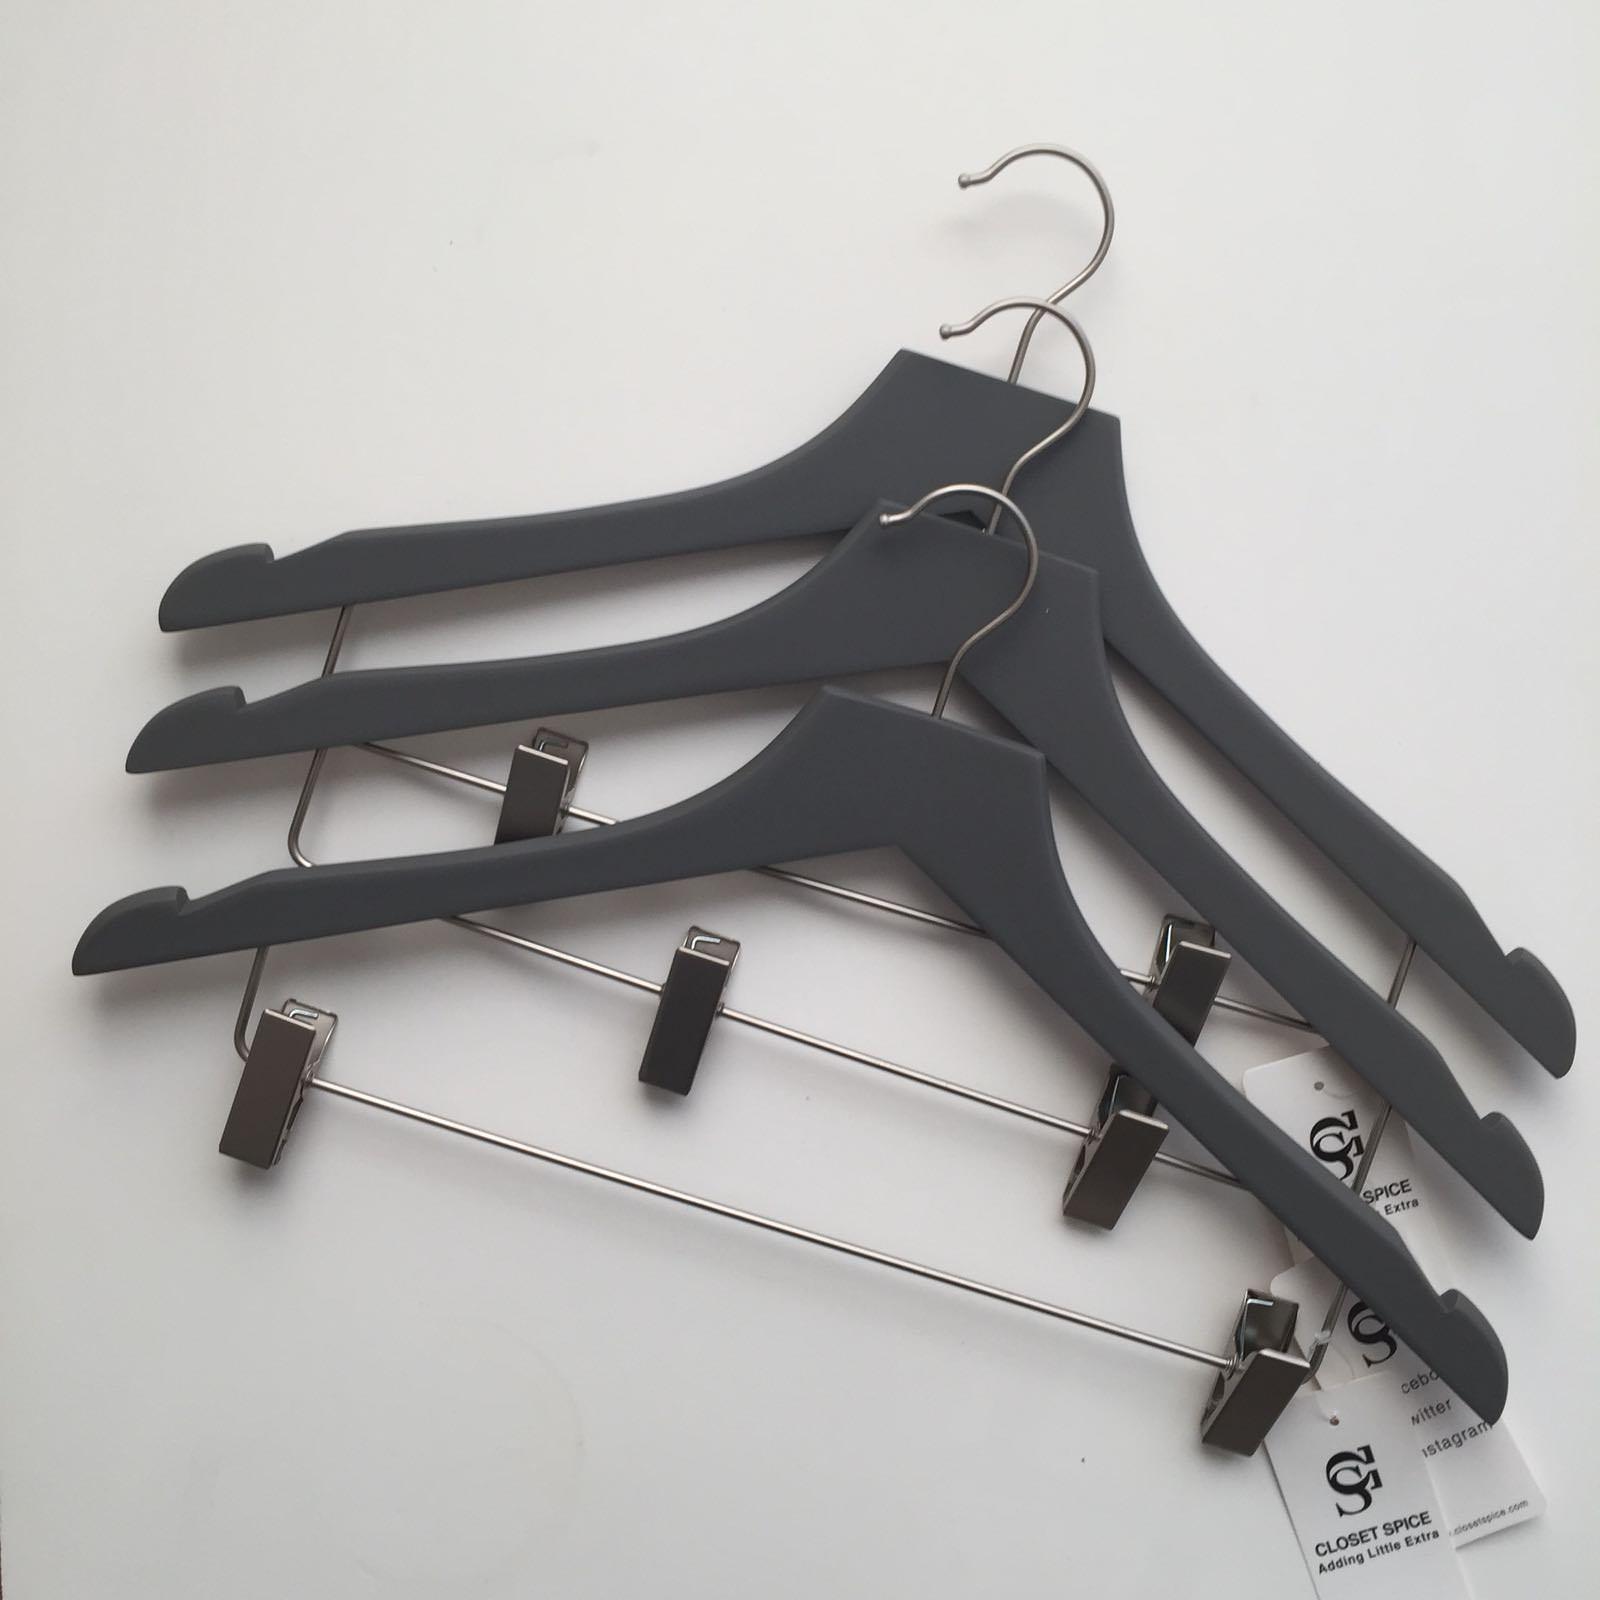 Closet Spice Rubber Felt Wood Suit Hangers with Clips - Set of 6 (Grey)